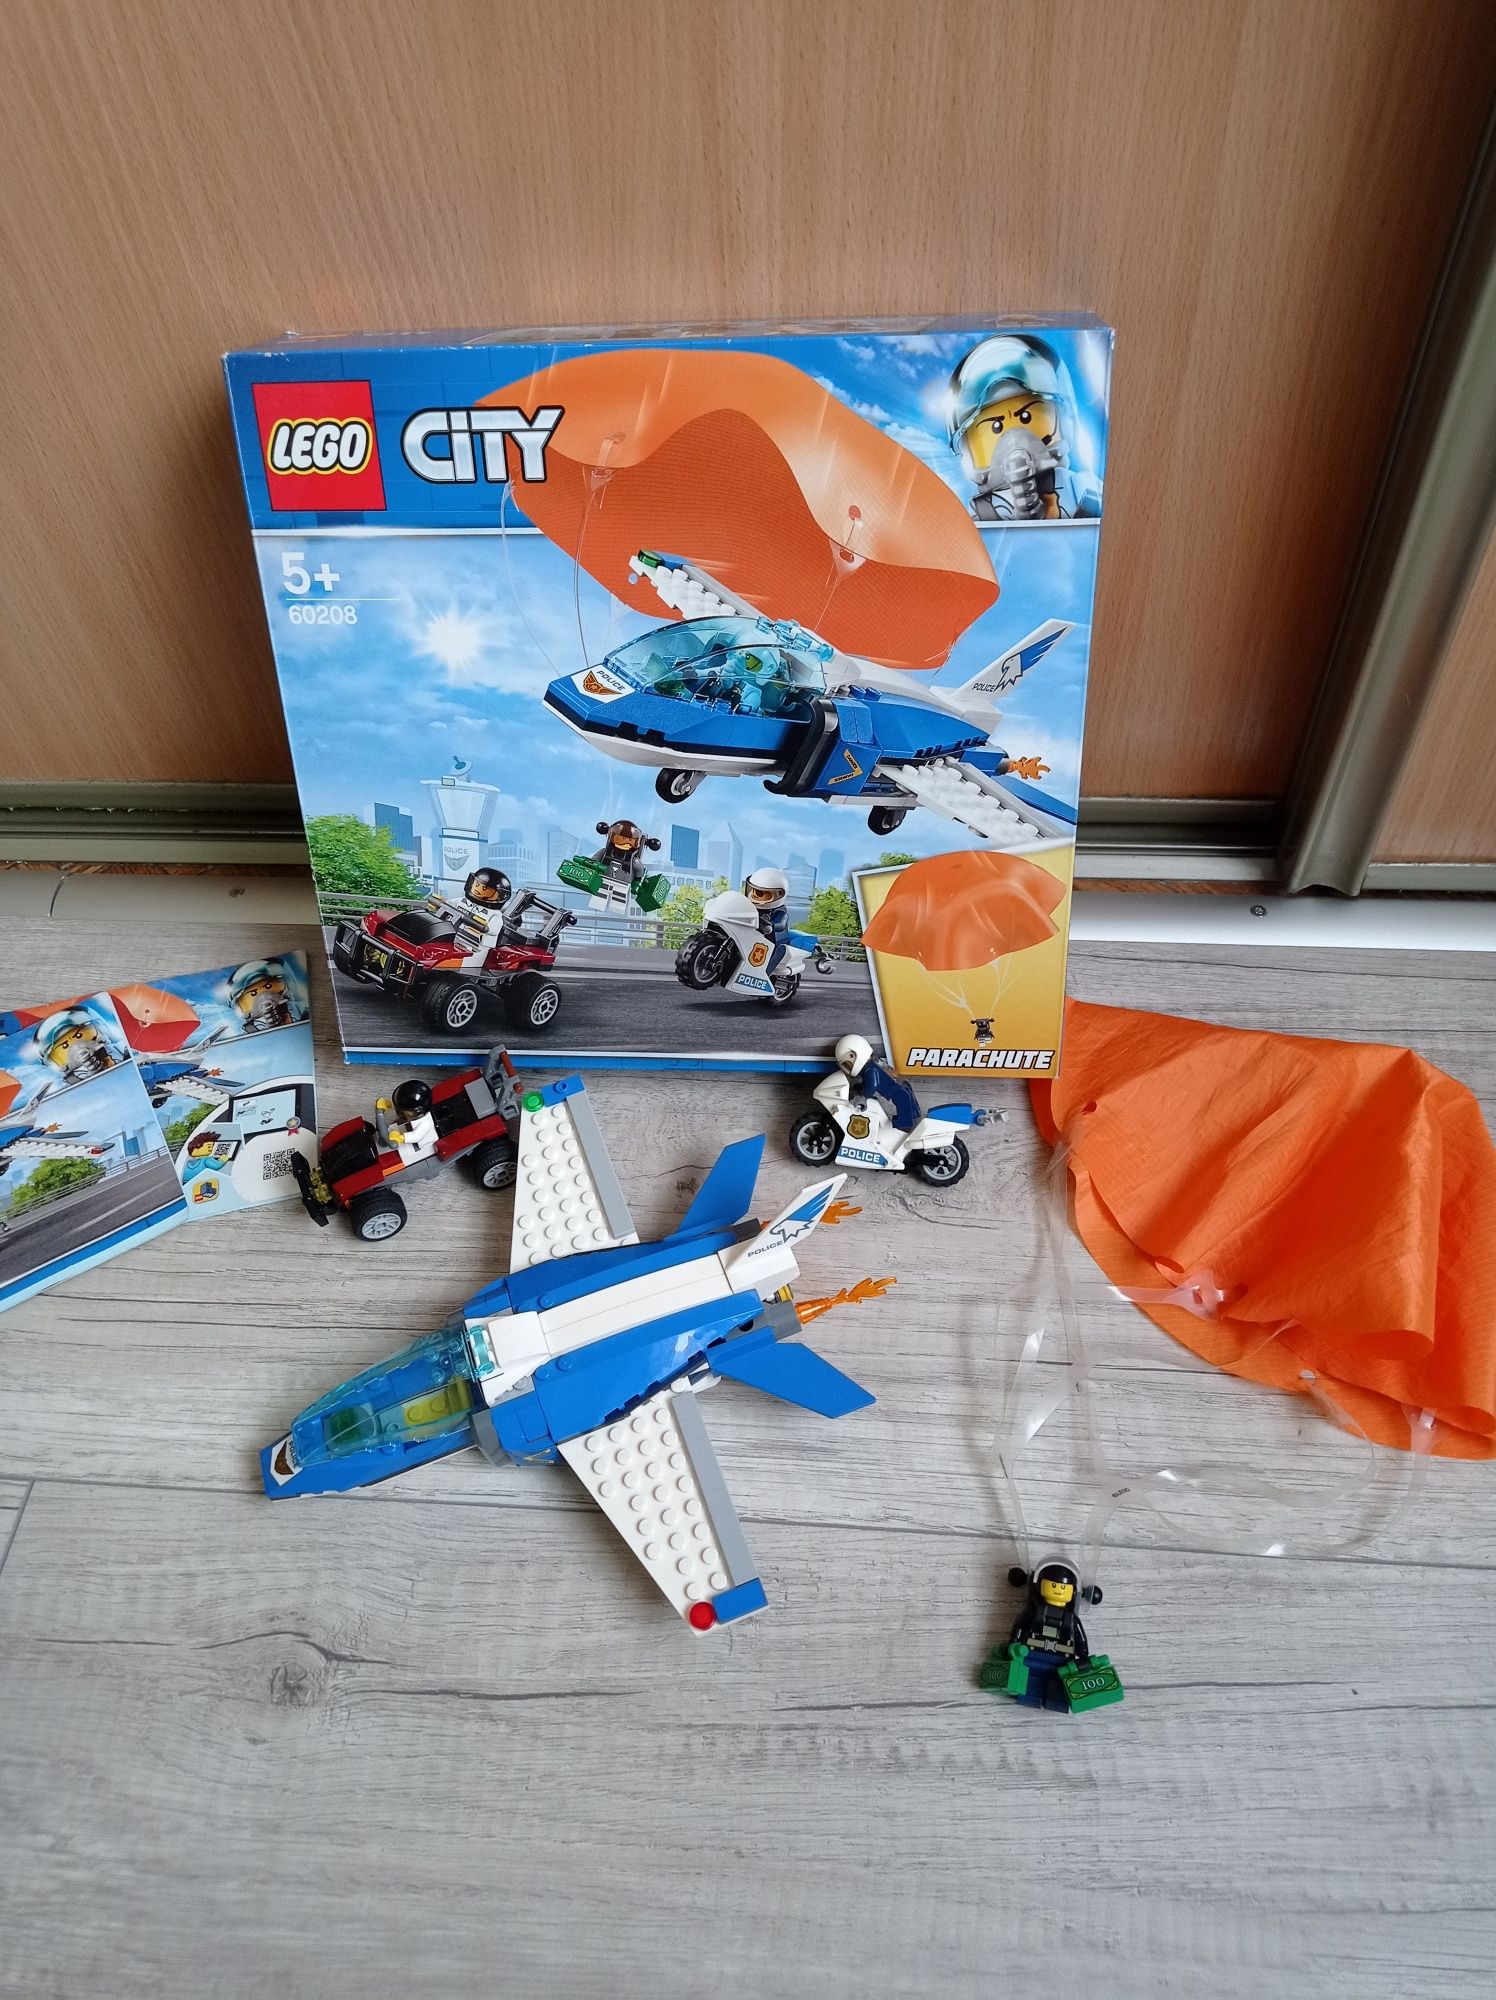 LEGO city model 60208